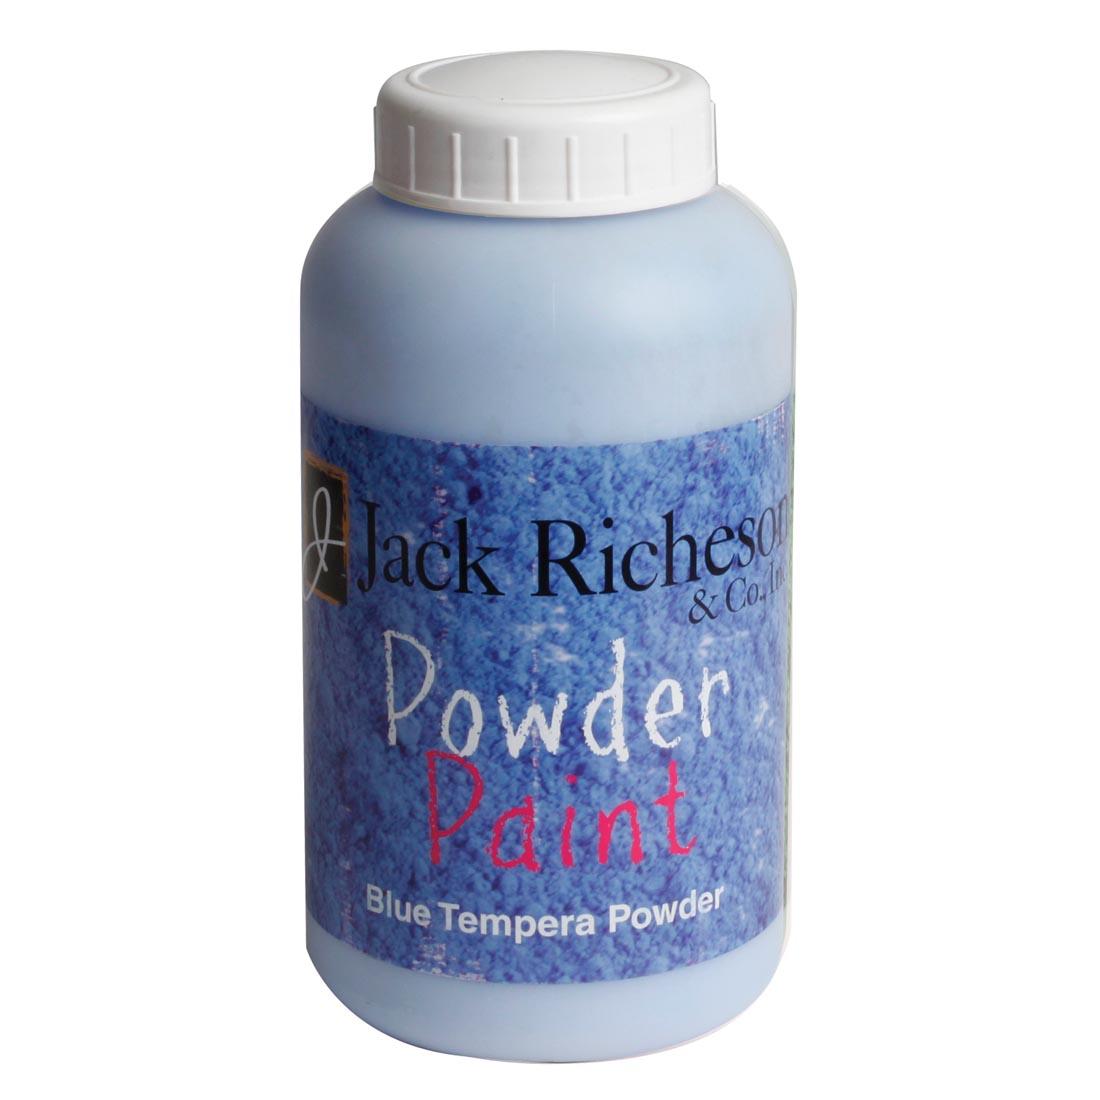 Jack Richeson Blue Tempera Powder Paint